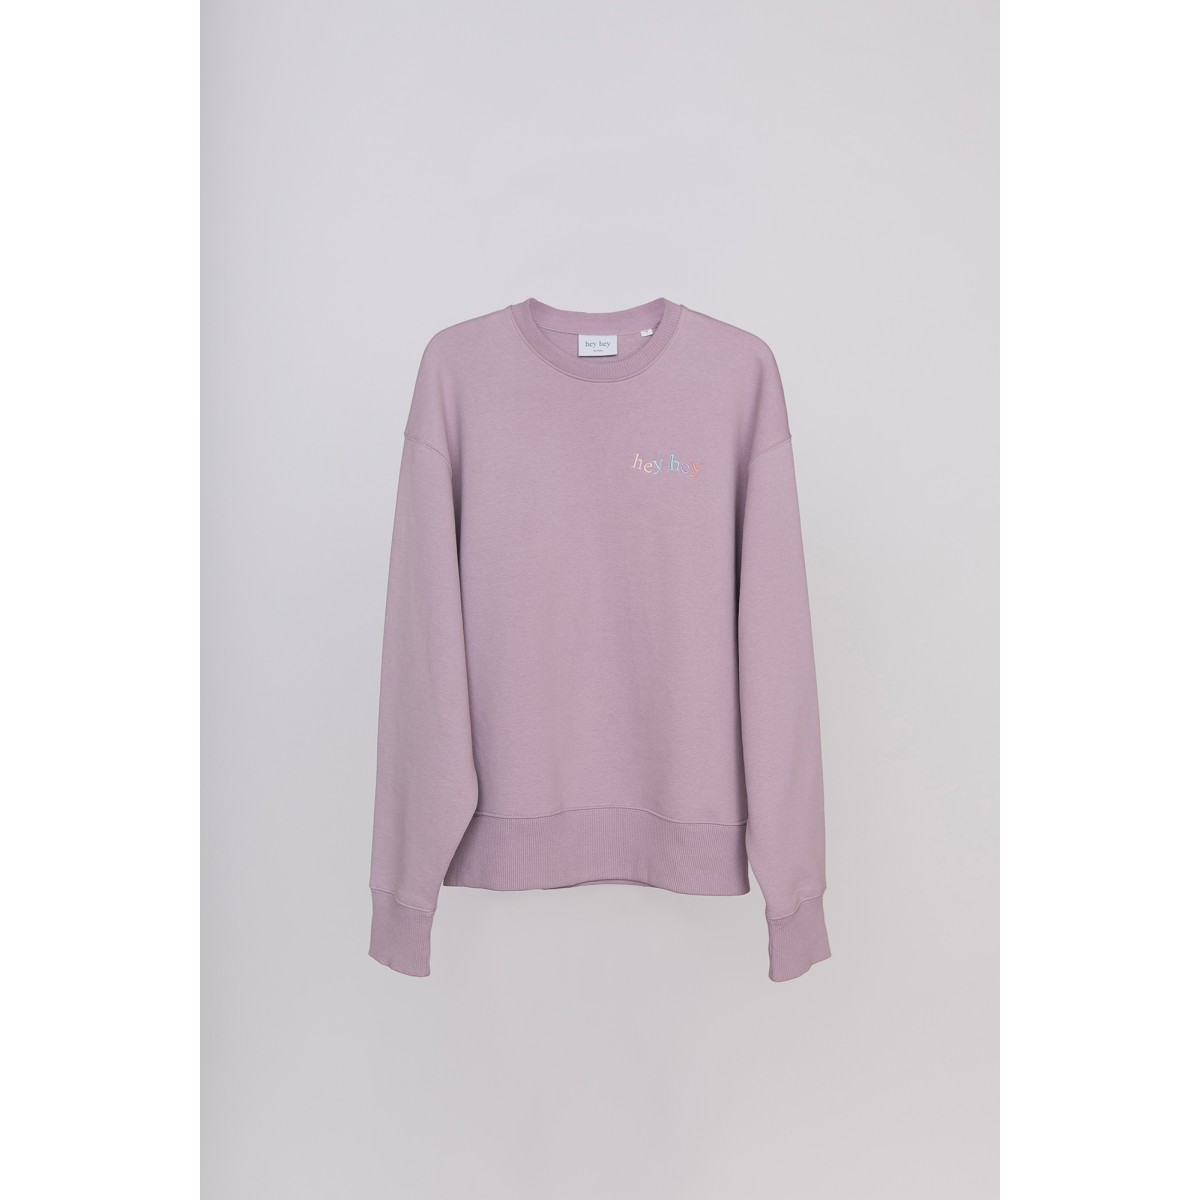 hey hey Rainbow Sweater – lavender